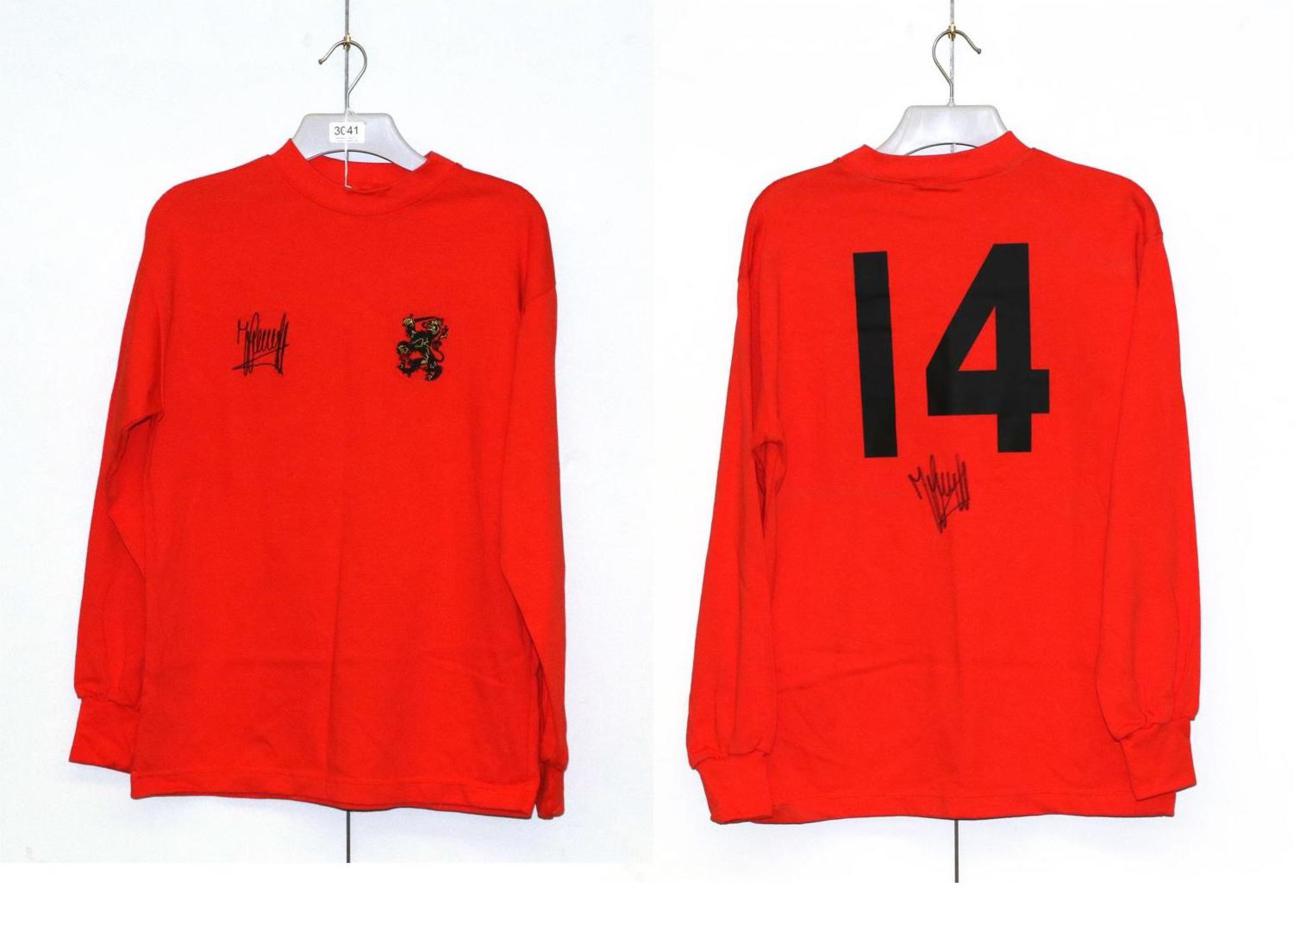 Lot 3041 - Netherlands Signed Shirt Johan Cruyff No.14